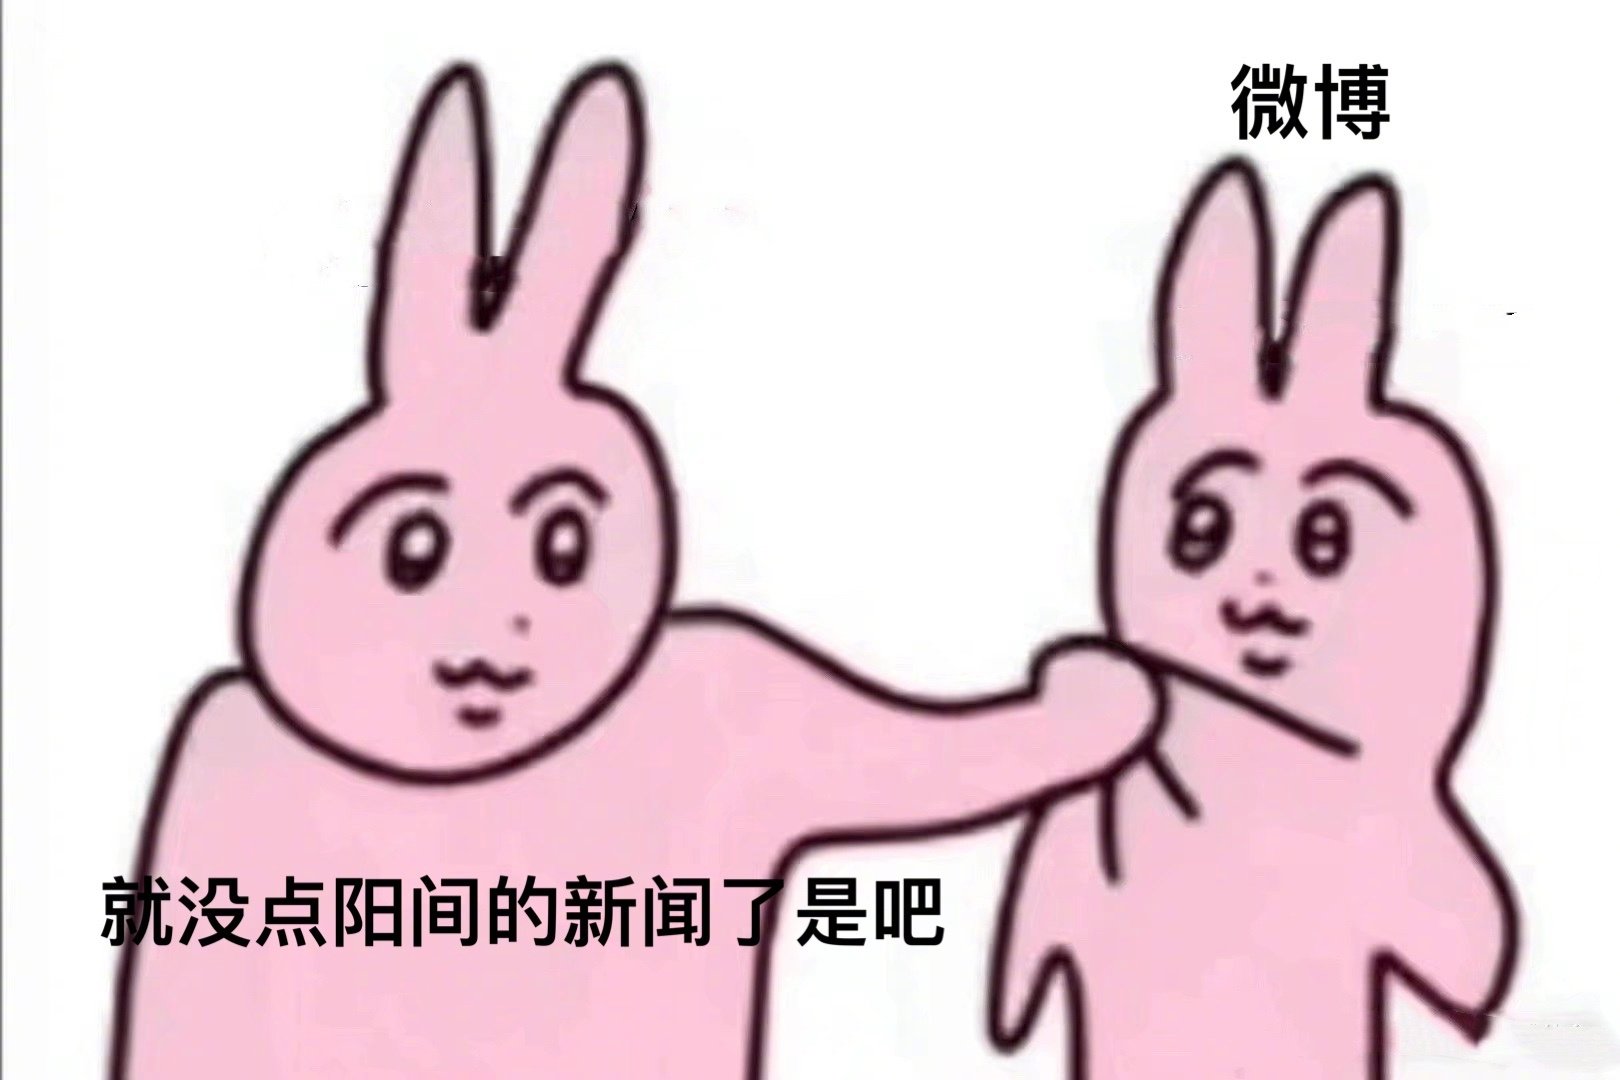 【ff14】关于那什么粉色兔子表情包 - 哔哩哔哩